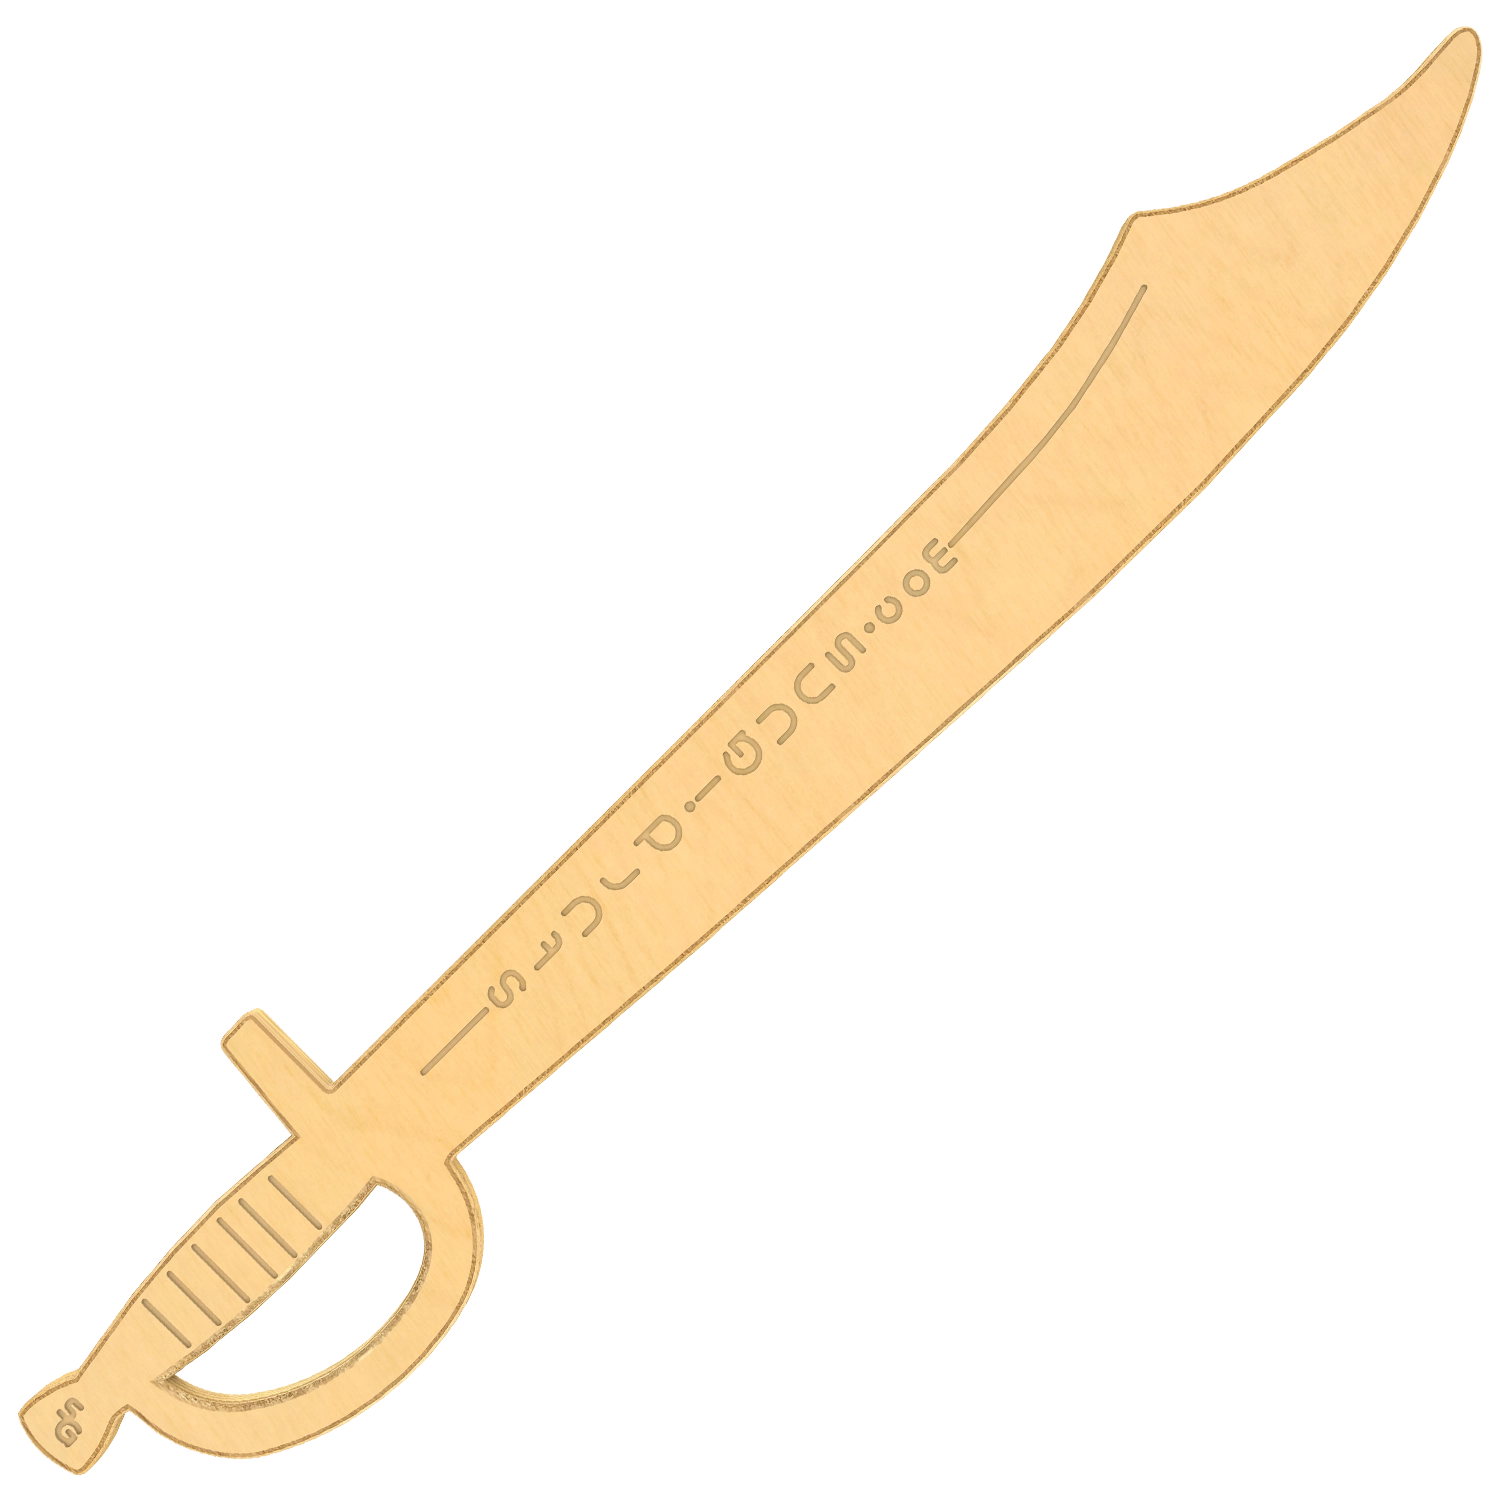 Pirate Sword